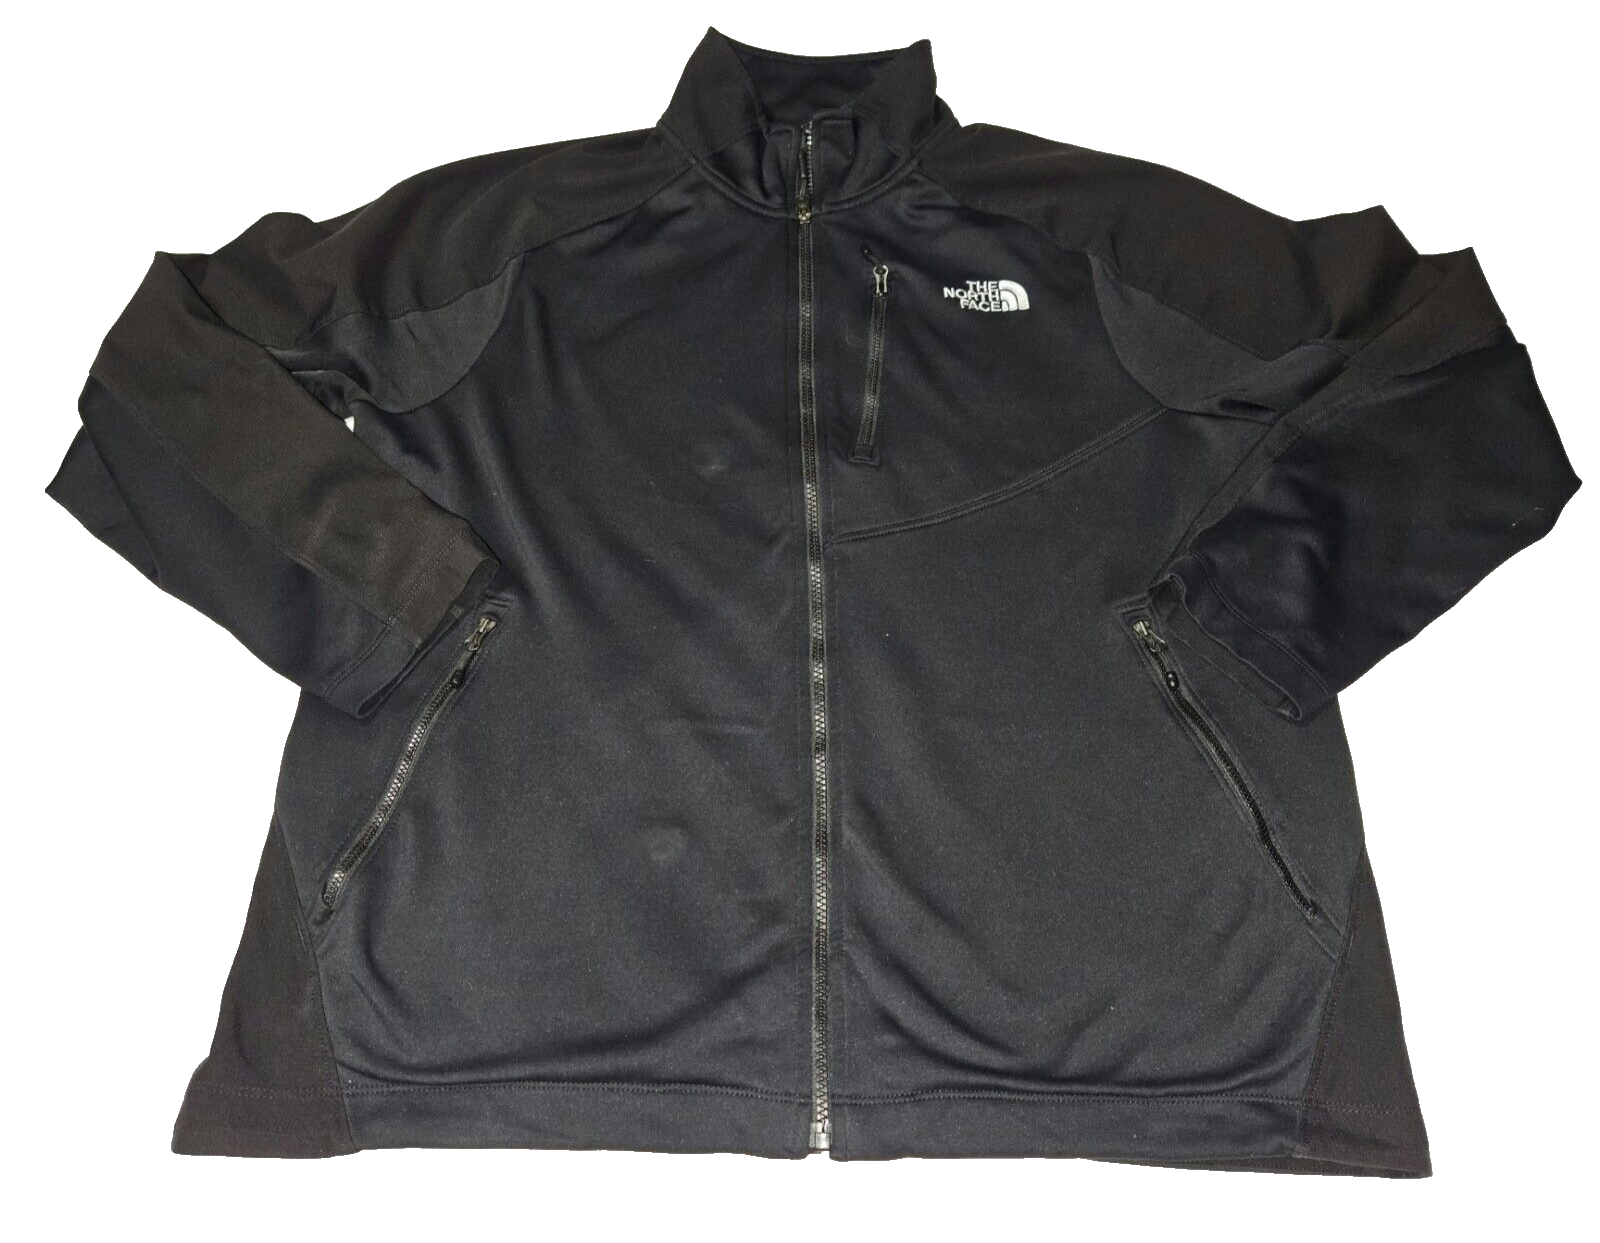 North Face Men's XL jacket Full Zip Softshell Jacket Black Color cold weather - $17.42